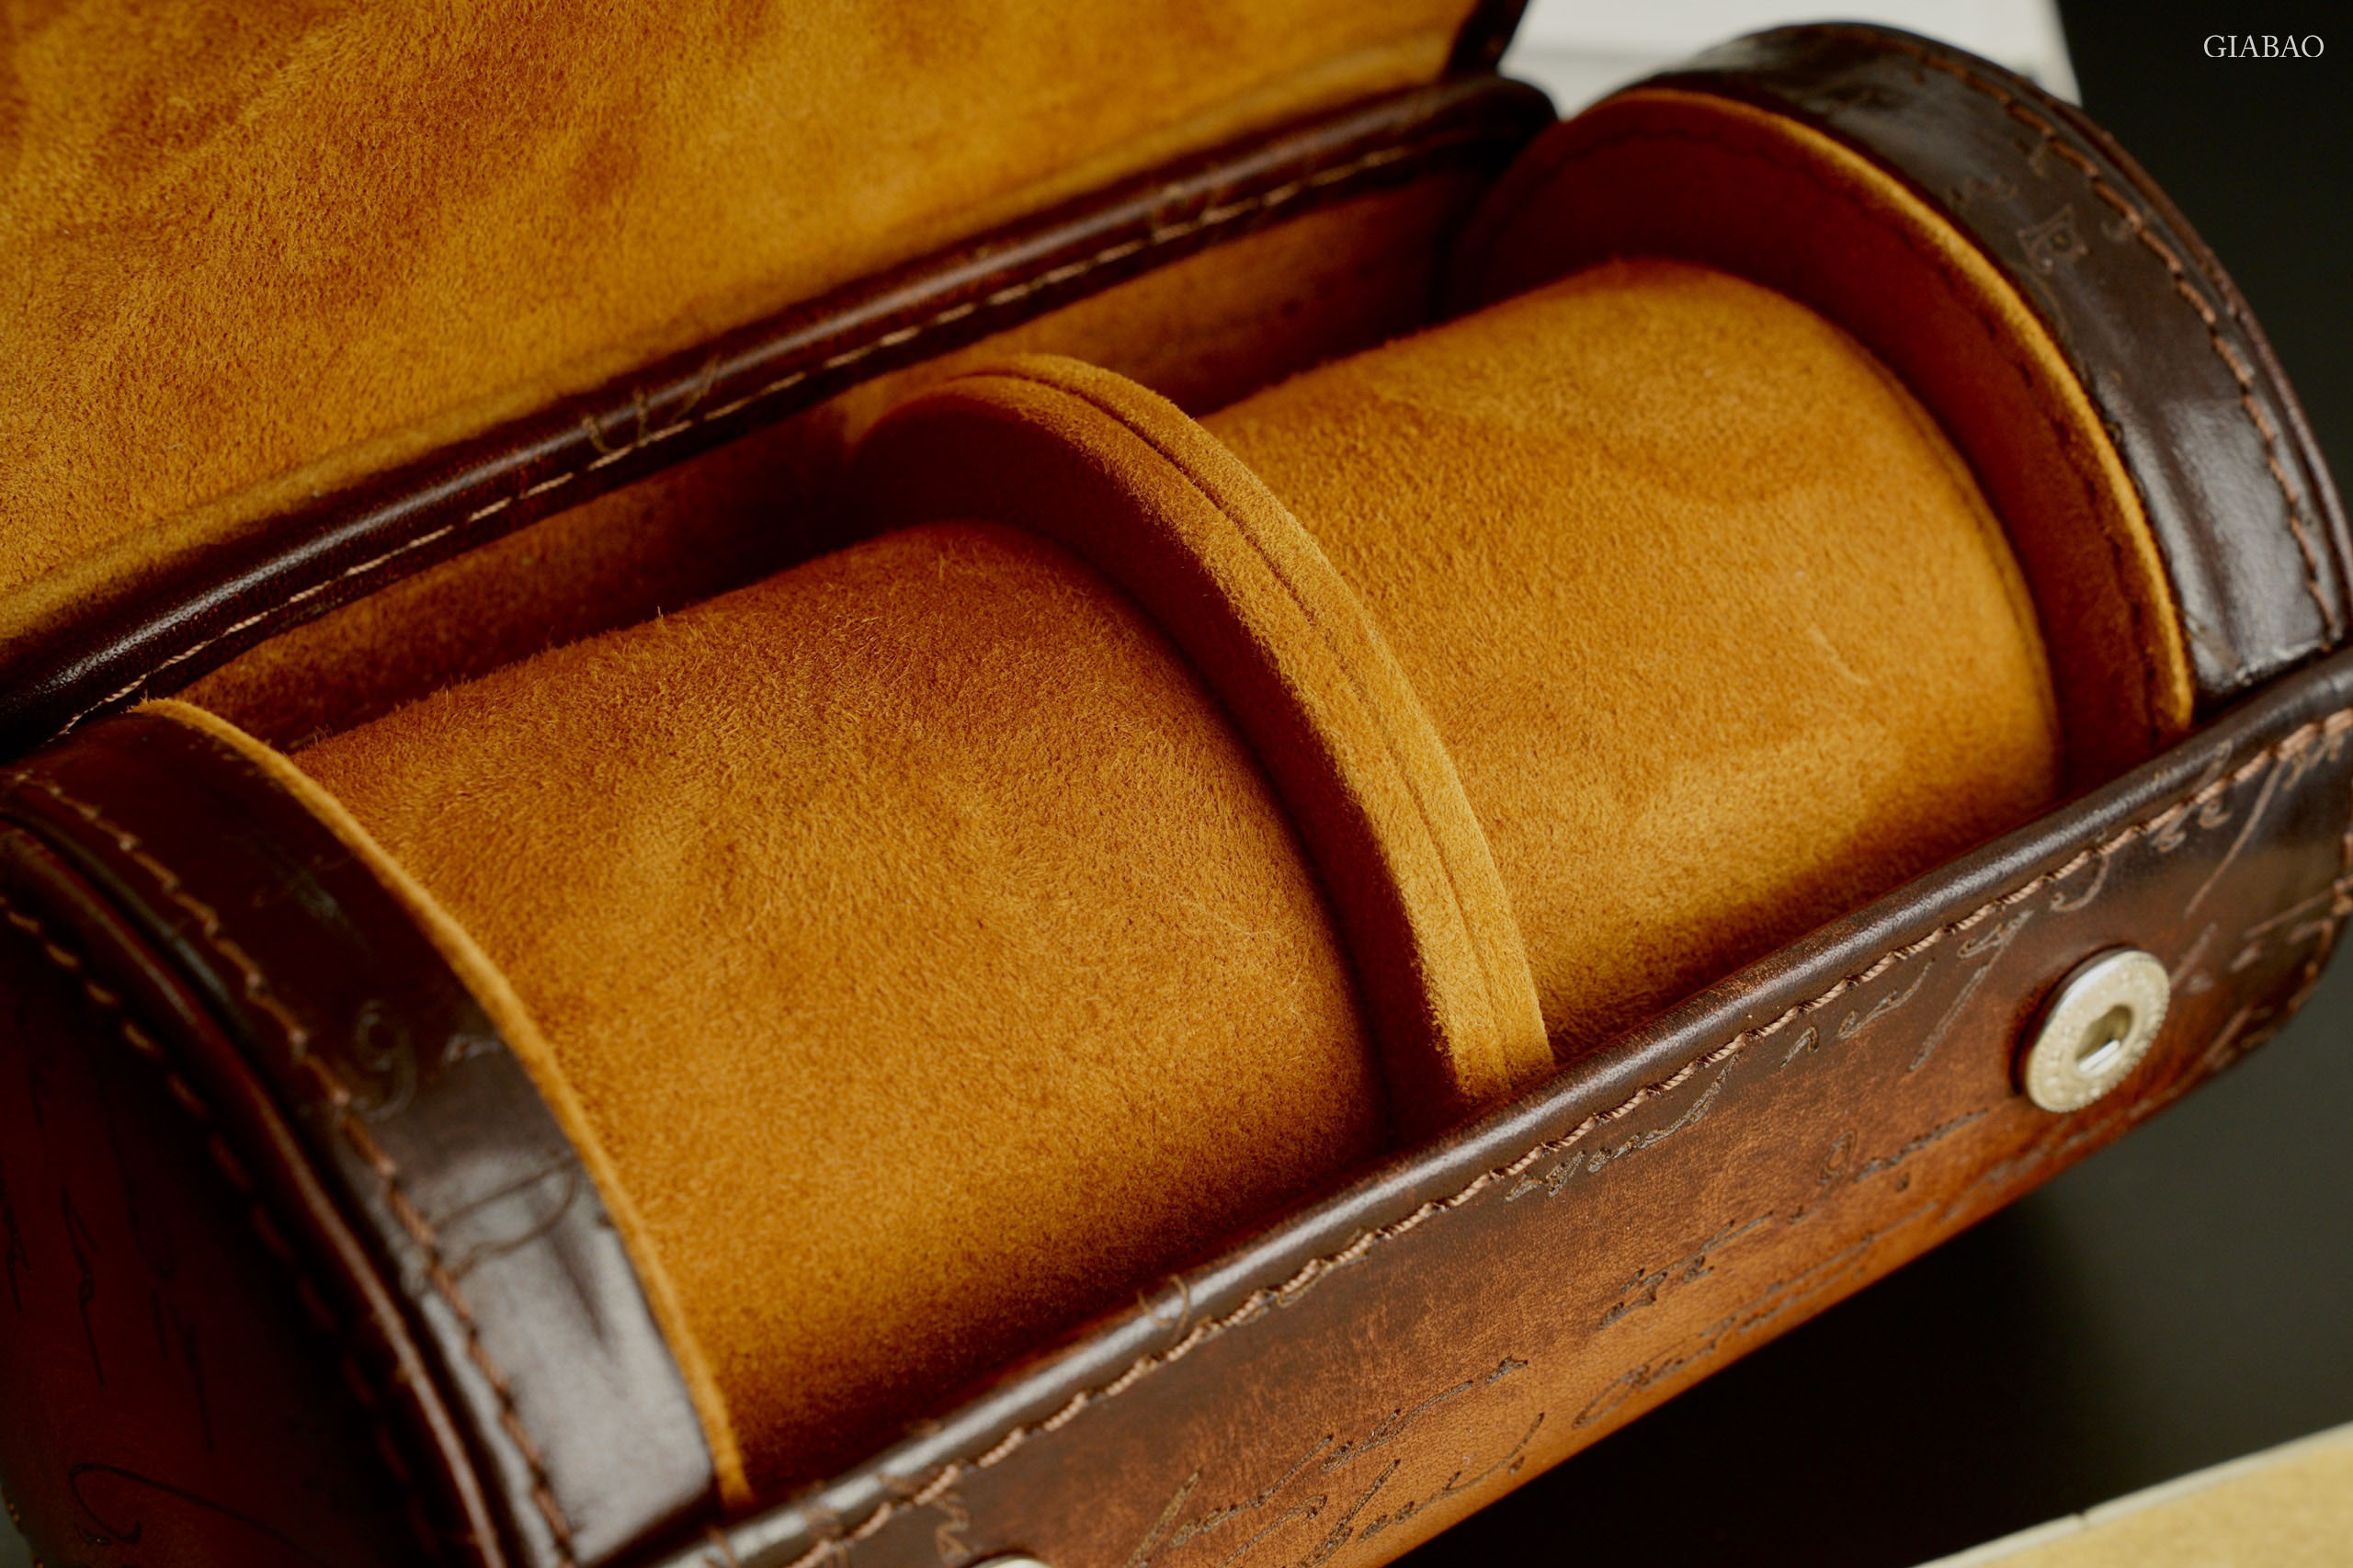 Hộp Travel Box 2 Ngăn Bosphorus Leather x Gia Bao Aras Parchment Patina Màu Nâu Sáng